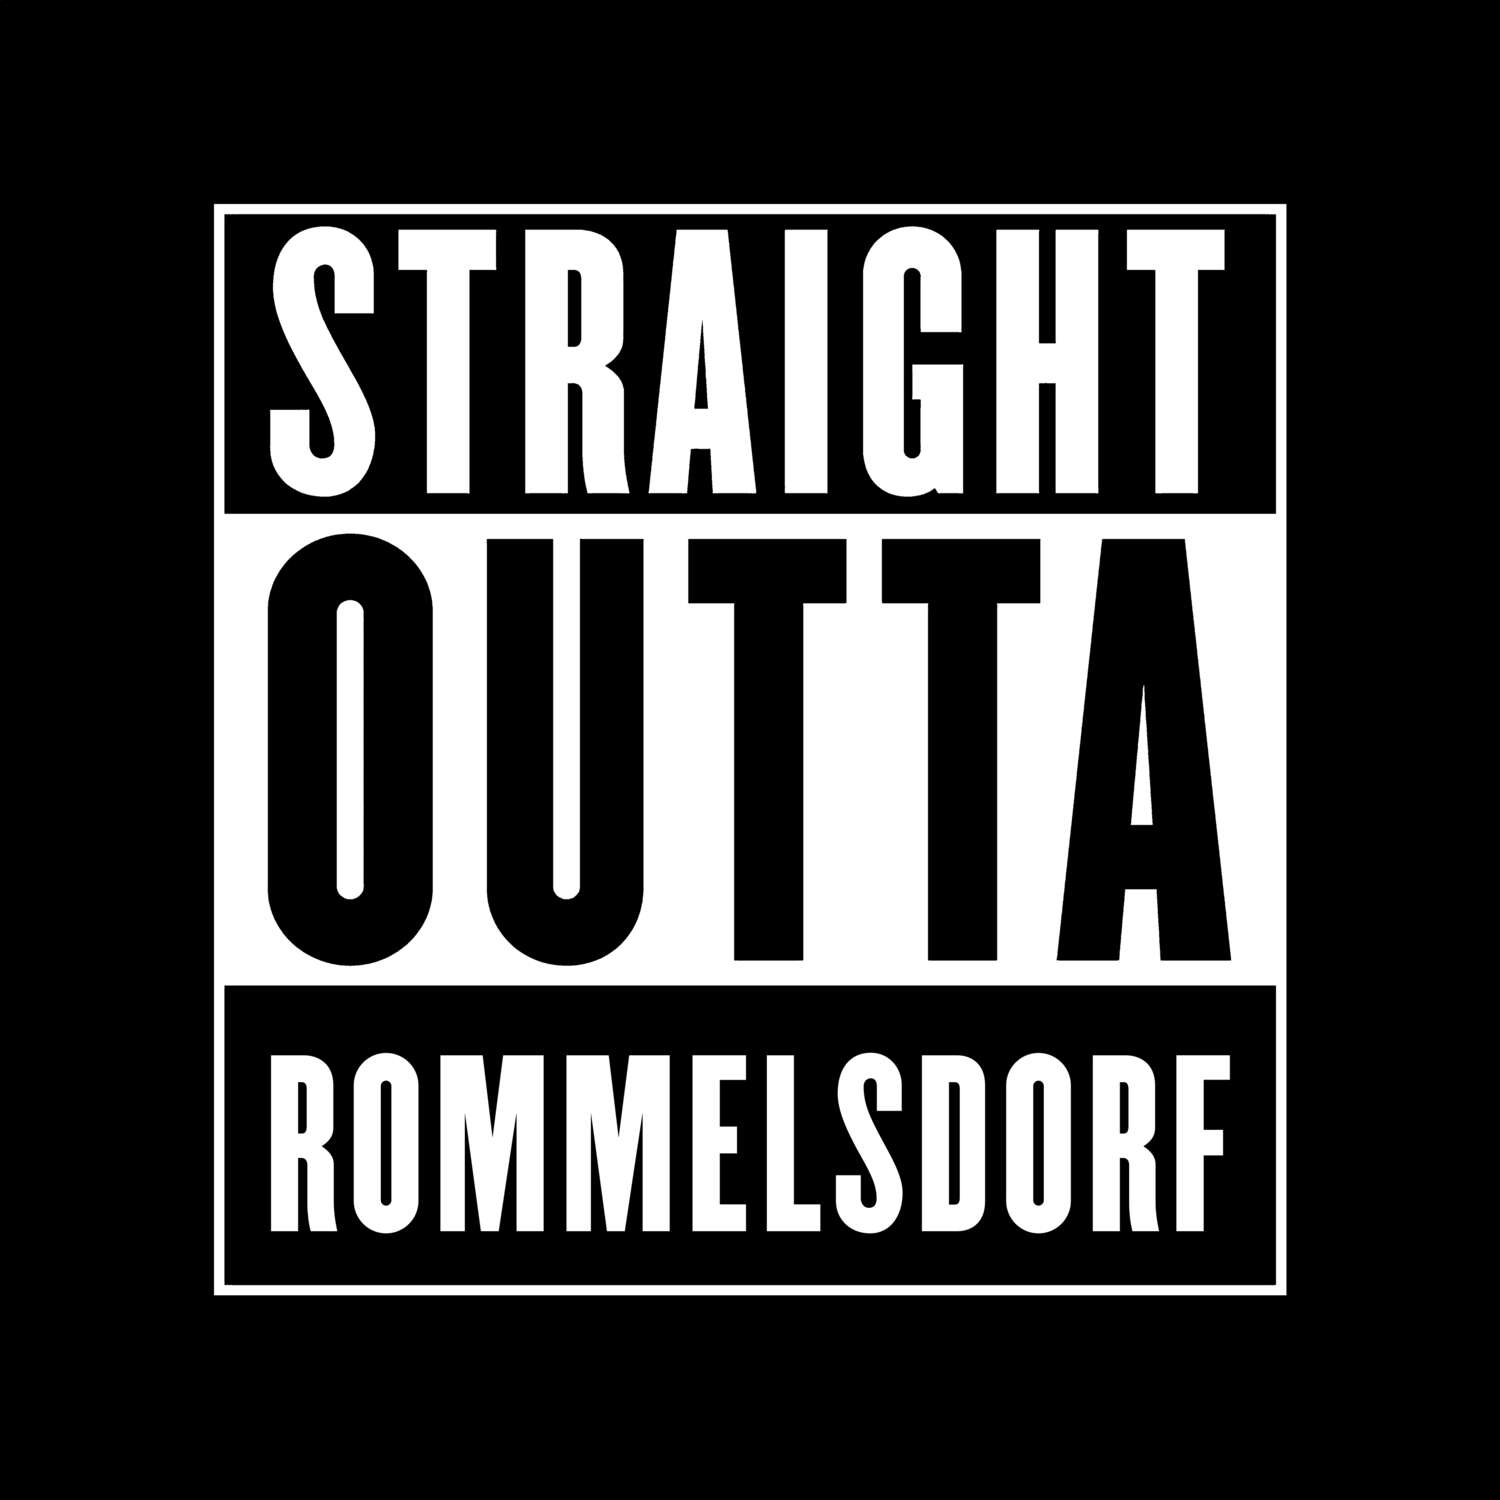 Rommelsdorf T-Shirt »Straight Outta«